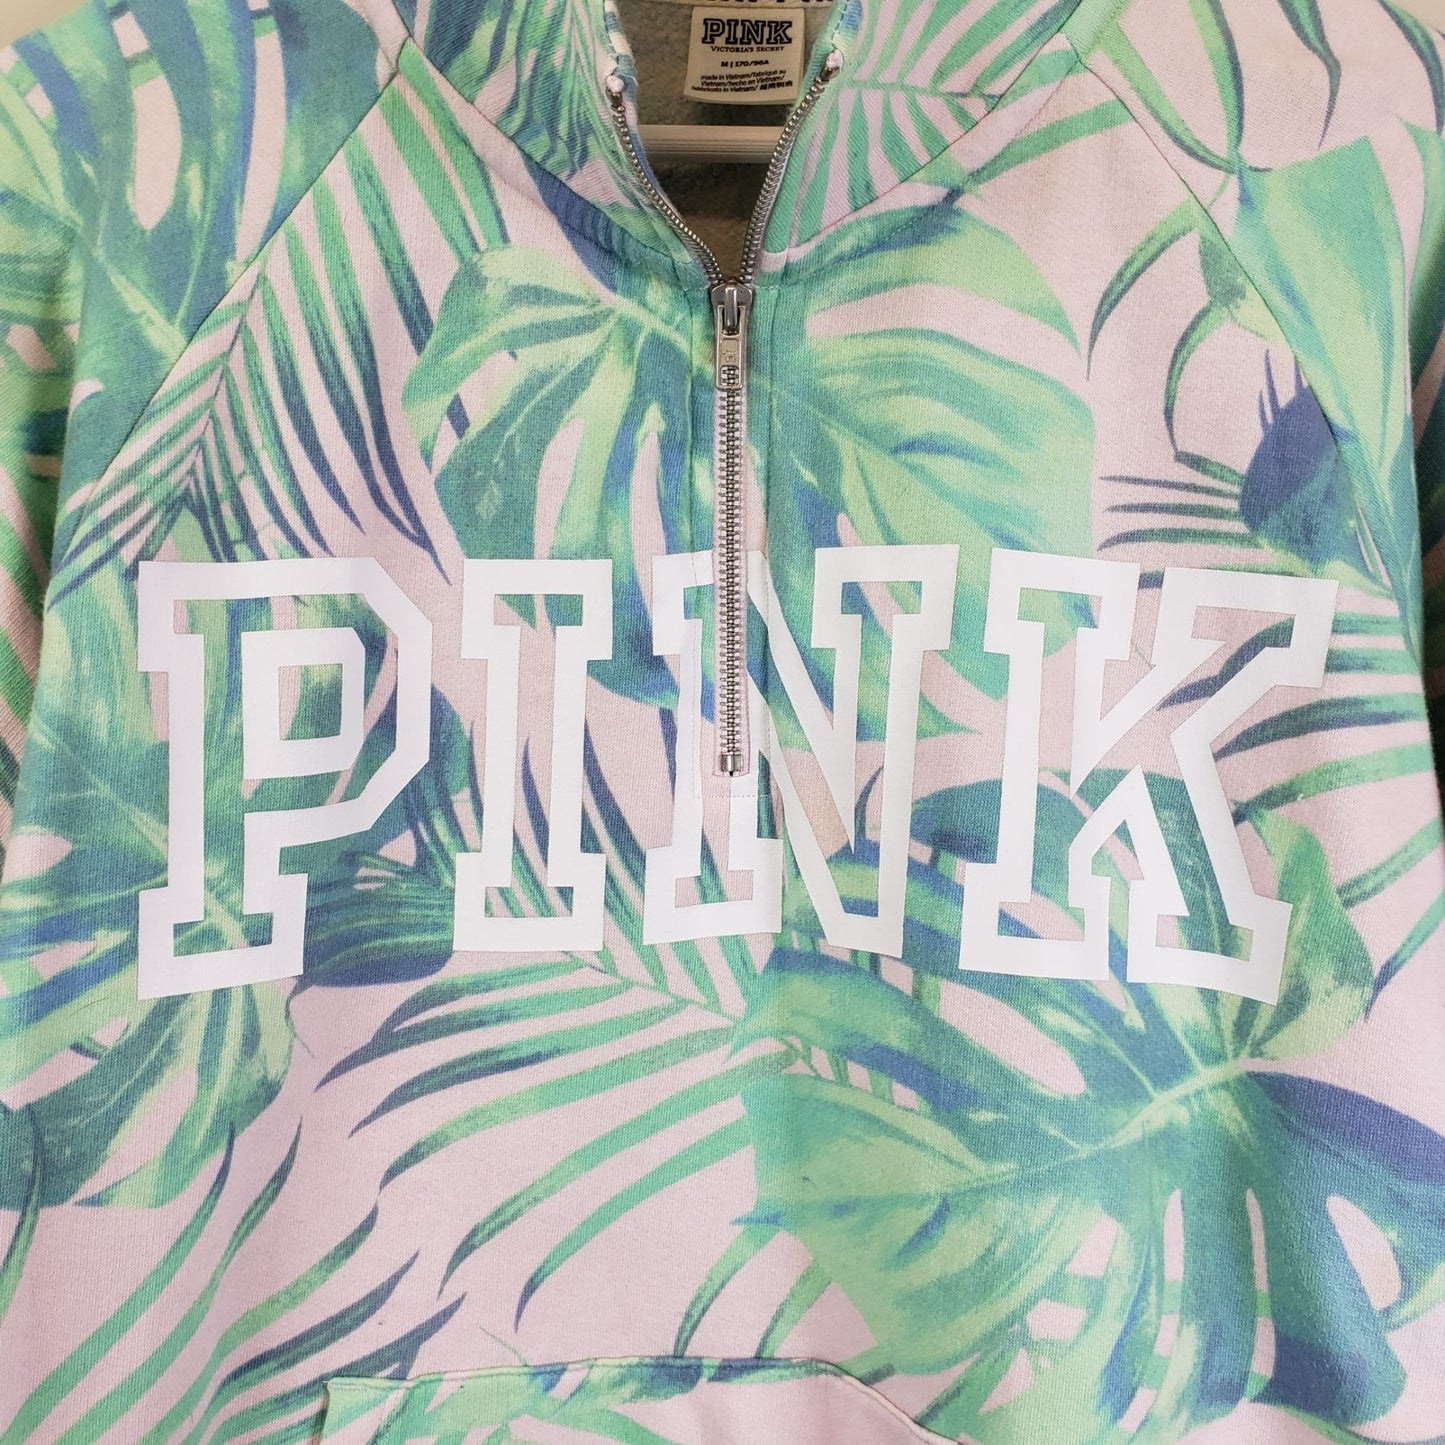 Pink Victoria's Secret Tropical Print Quarter Zip Sweatshirt Size Medium